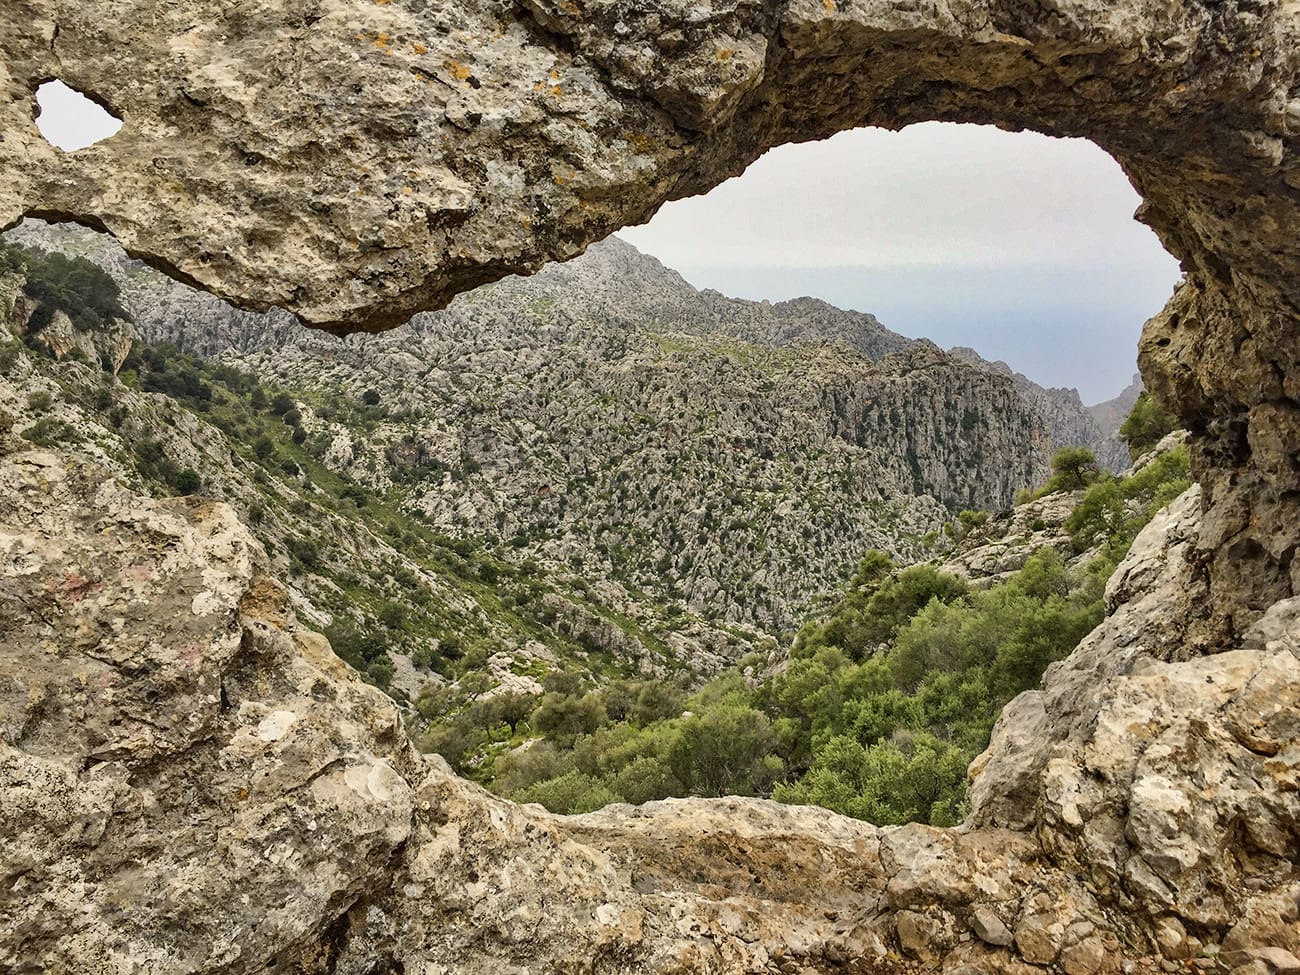 Hiking the Torrent de Pareis in Majorca